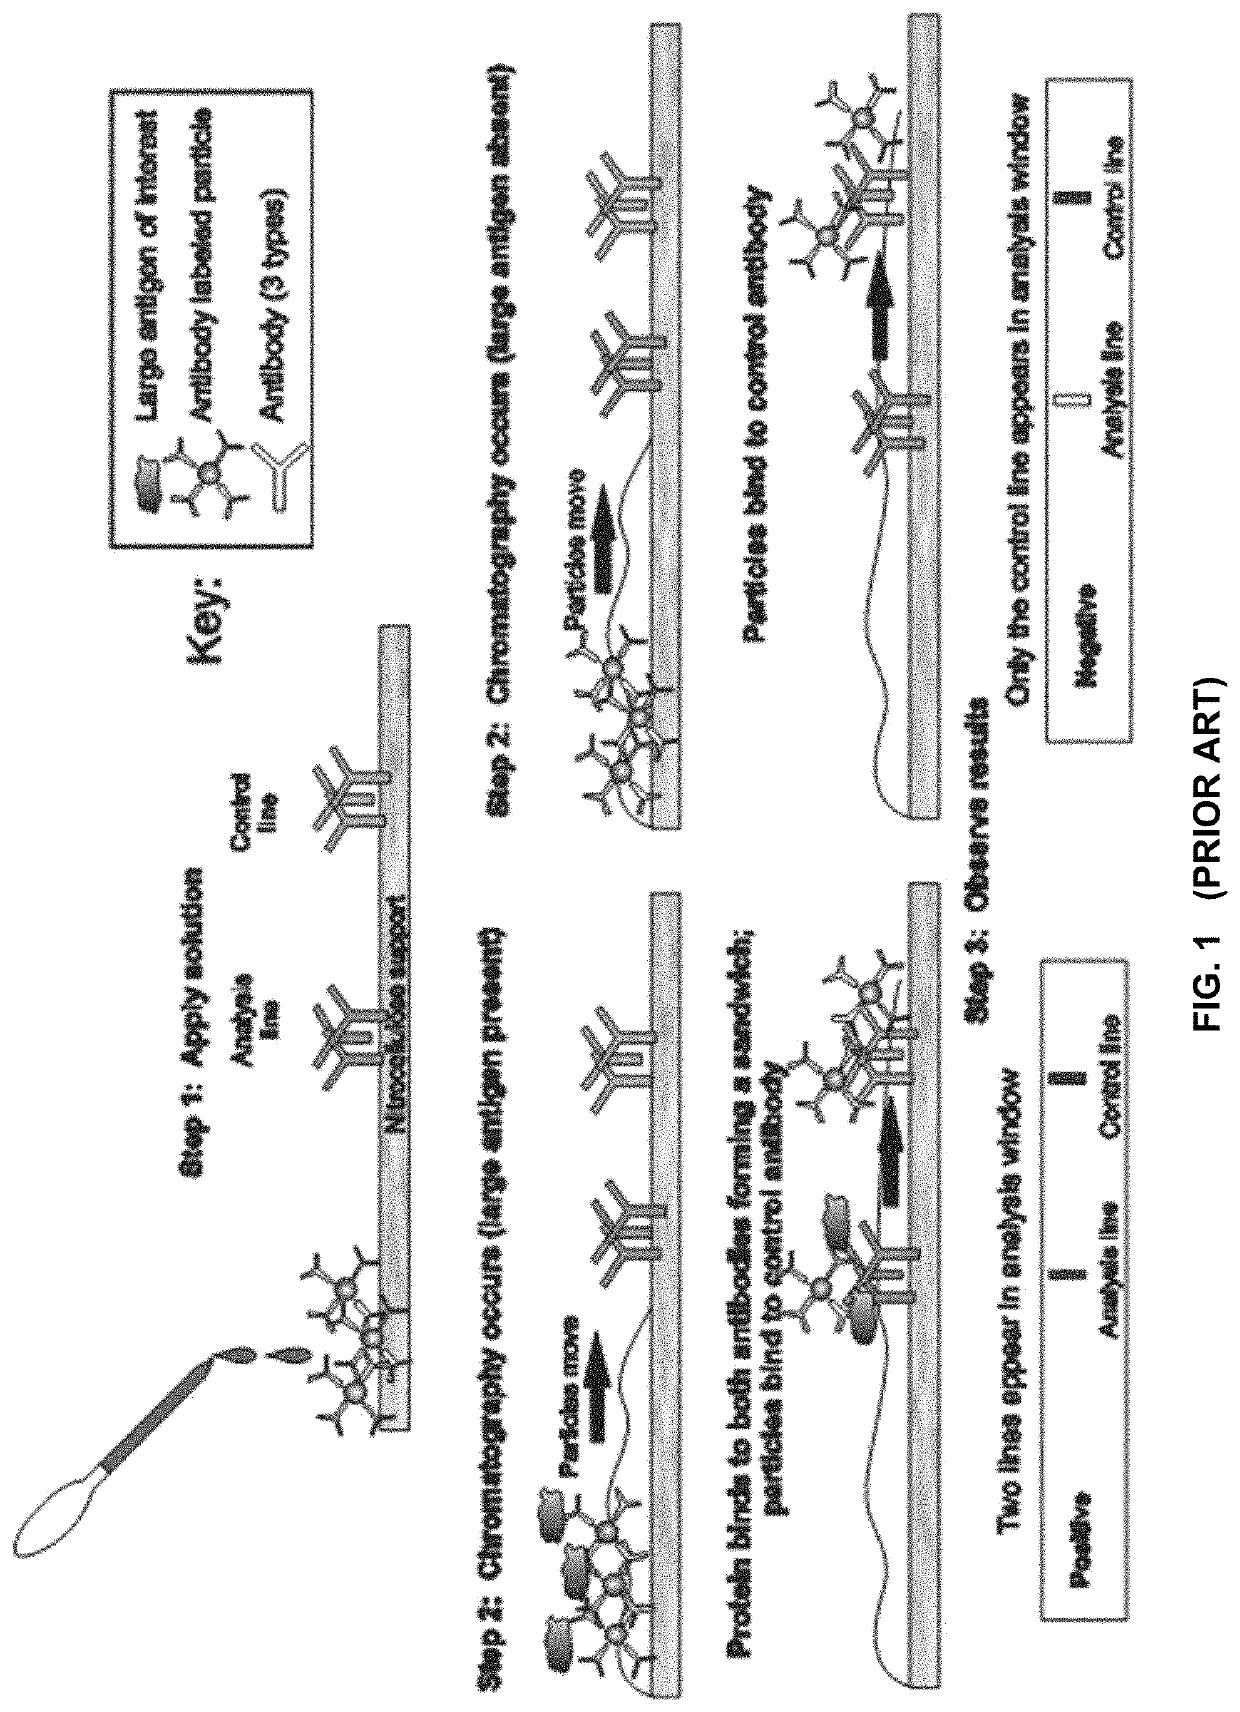 Catalytic signal enhancement for lateral flow immunoassays